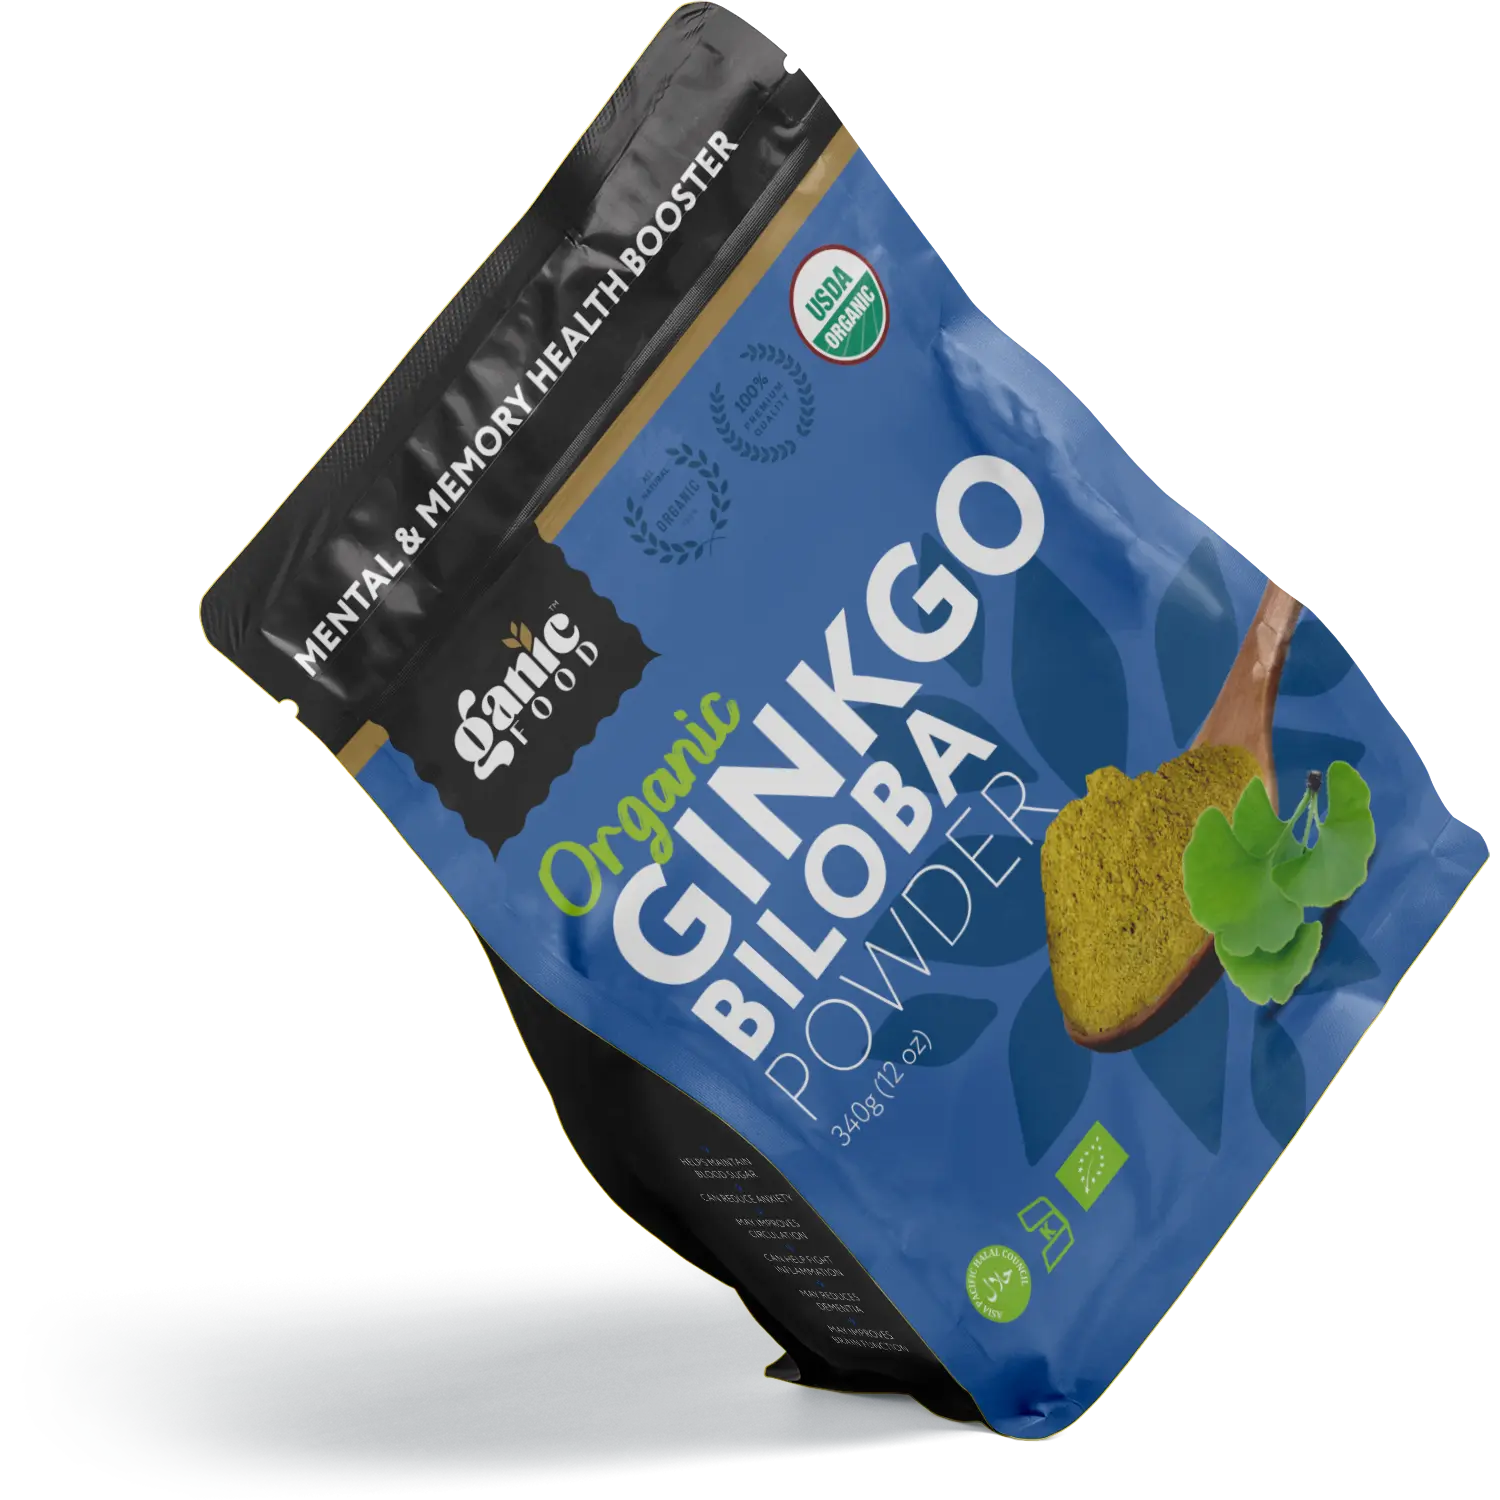 Organic Ginkgo Biloba Powder